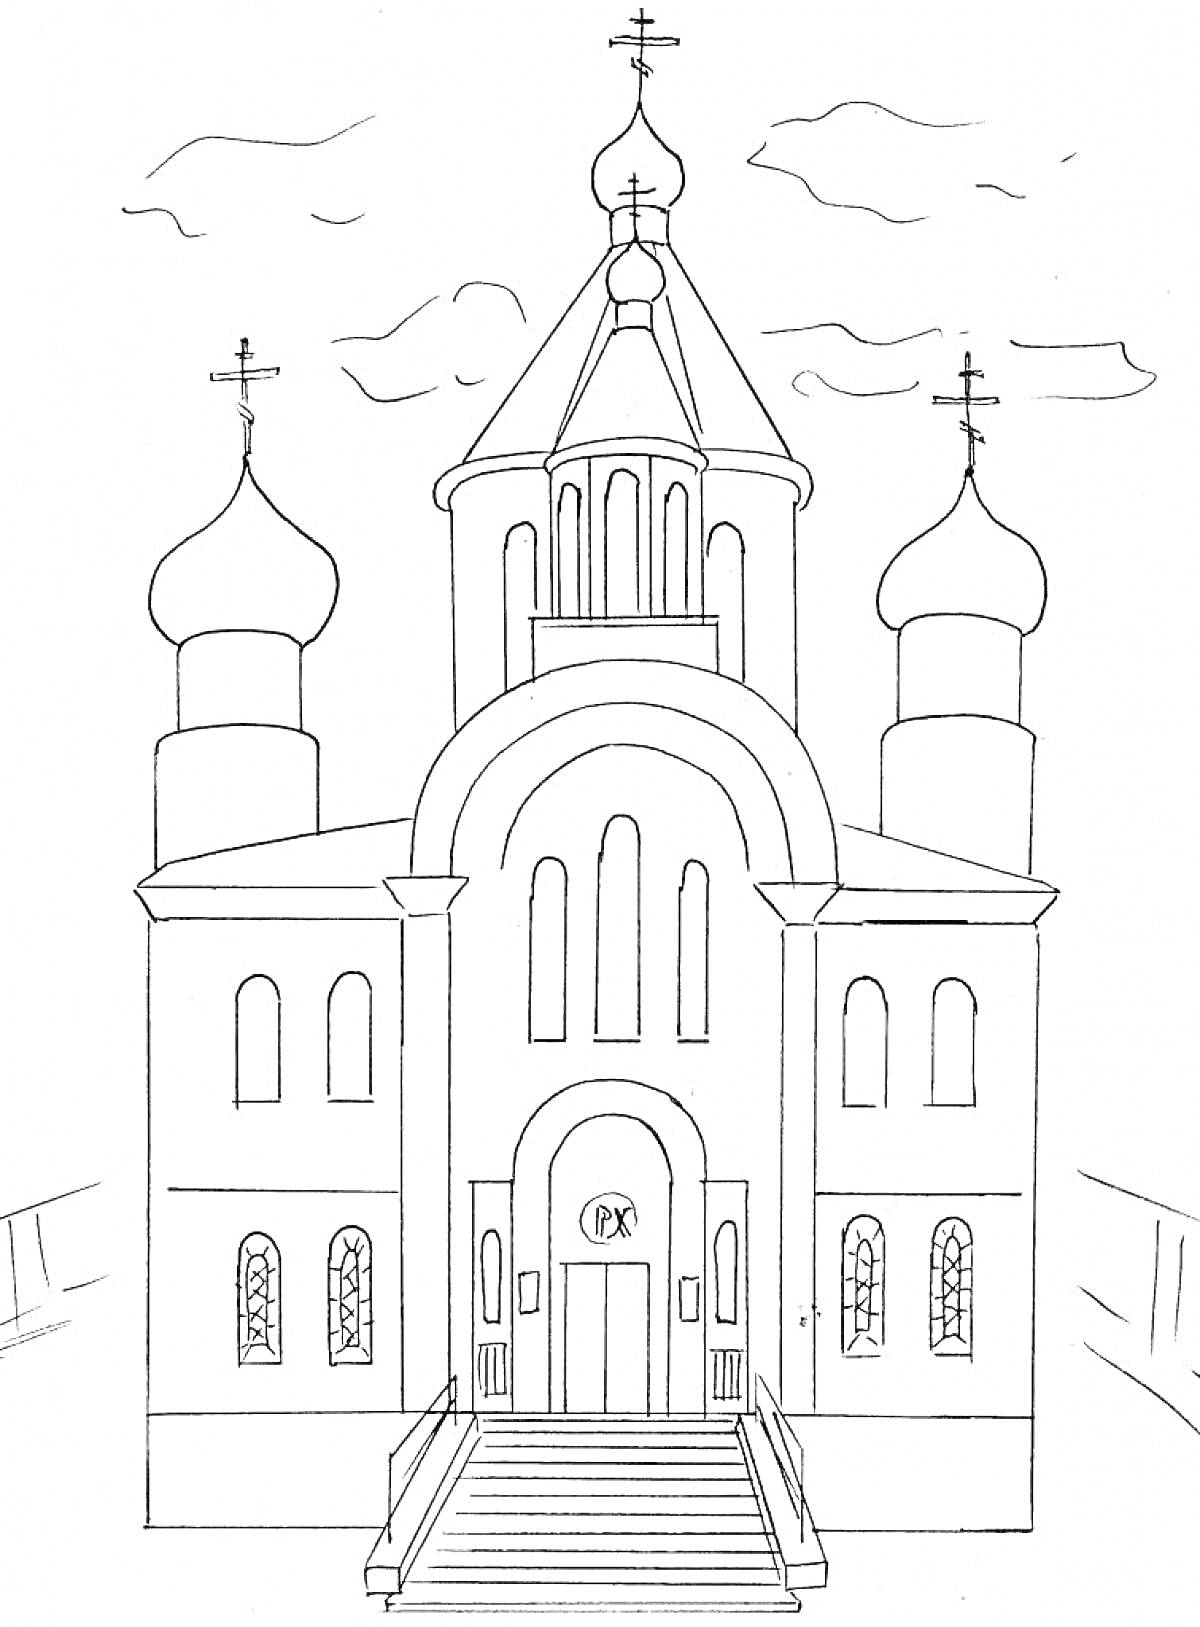 На раскраске изображено: Храм, Купола, Архитектура, Лестница, Крыльцо, Окна, Религия, Православие, Облака, Крест